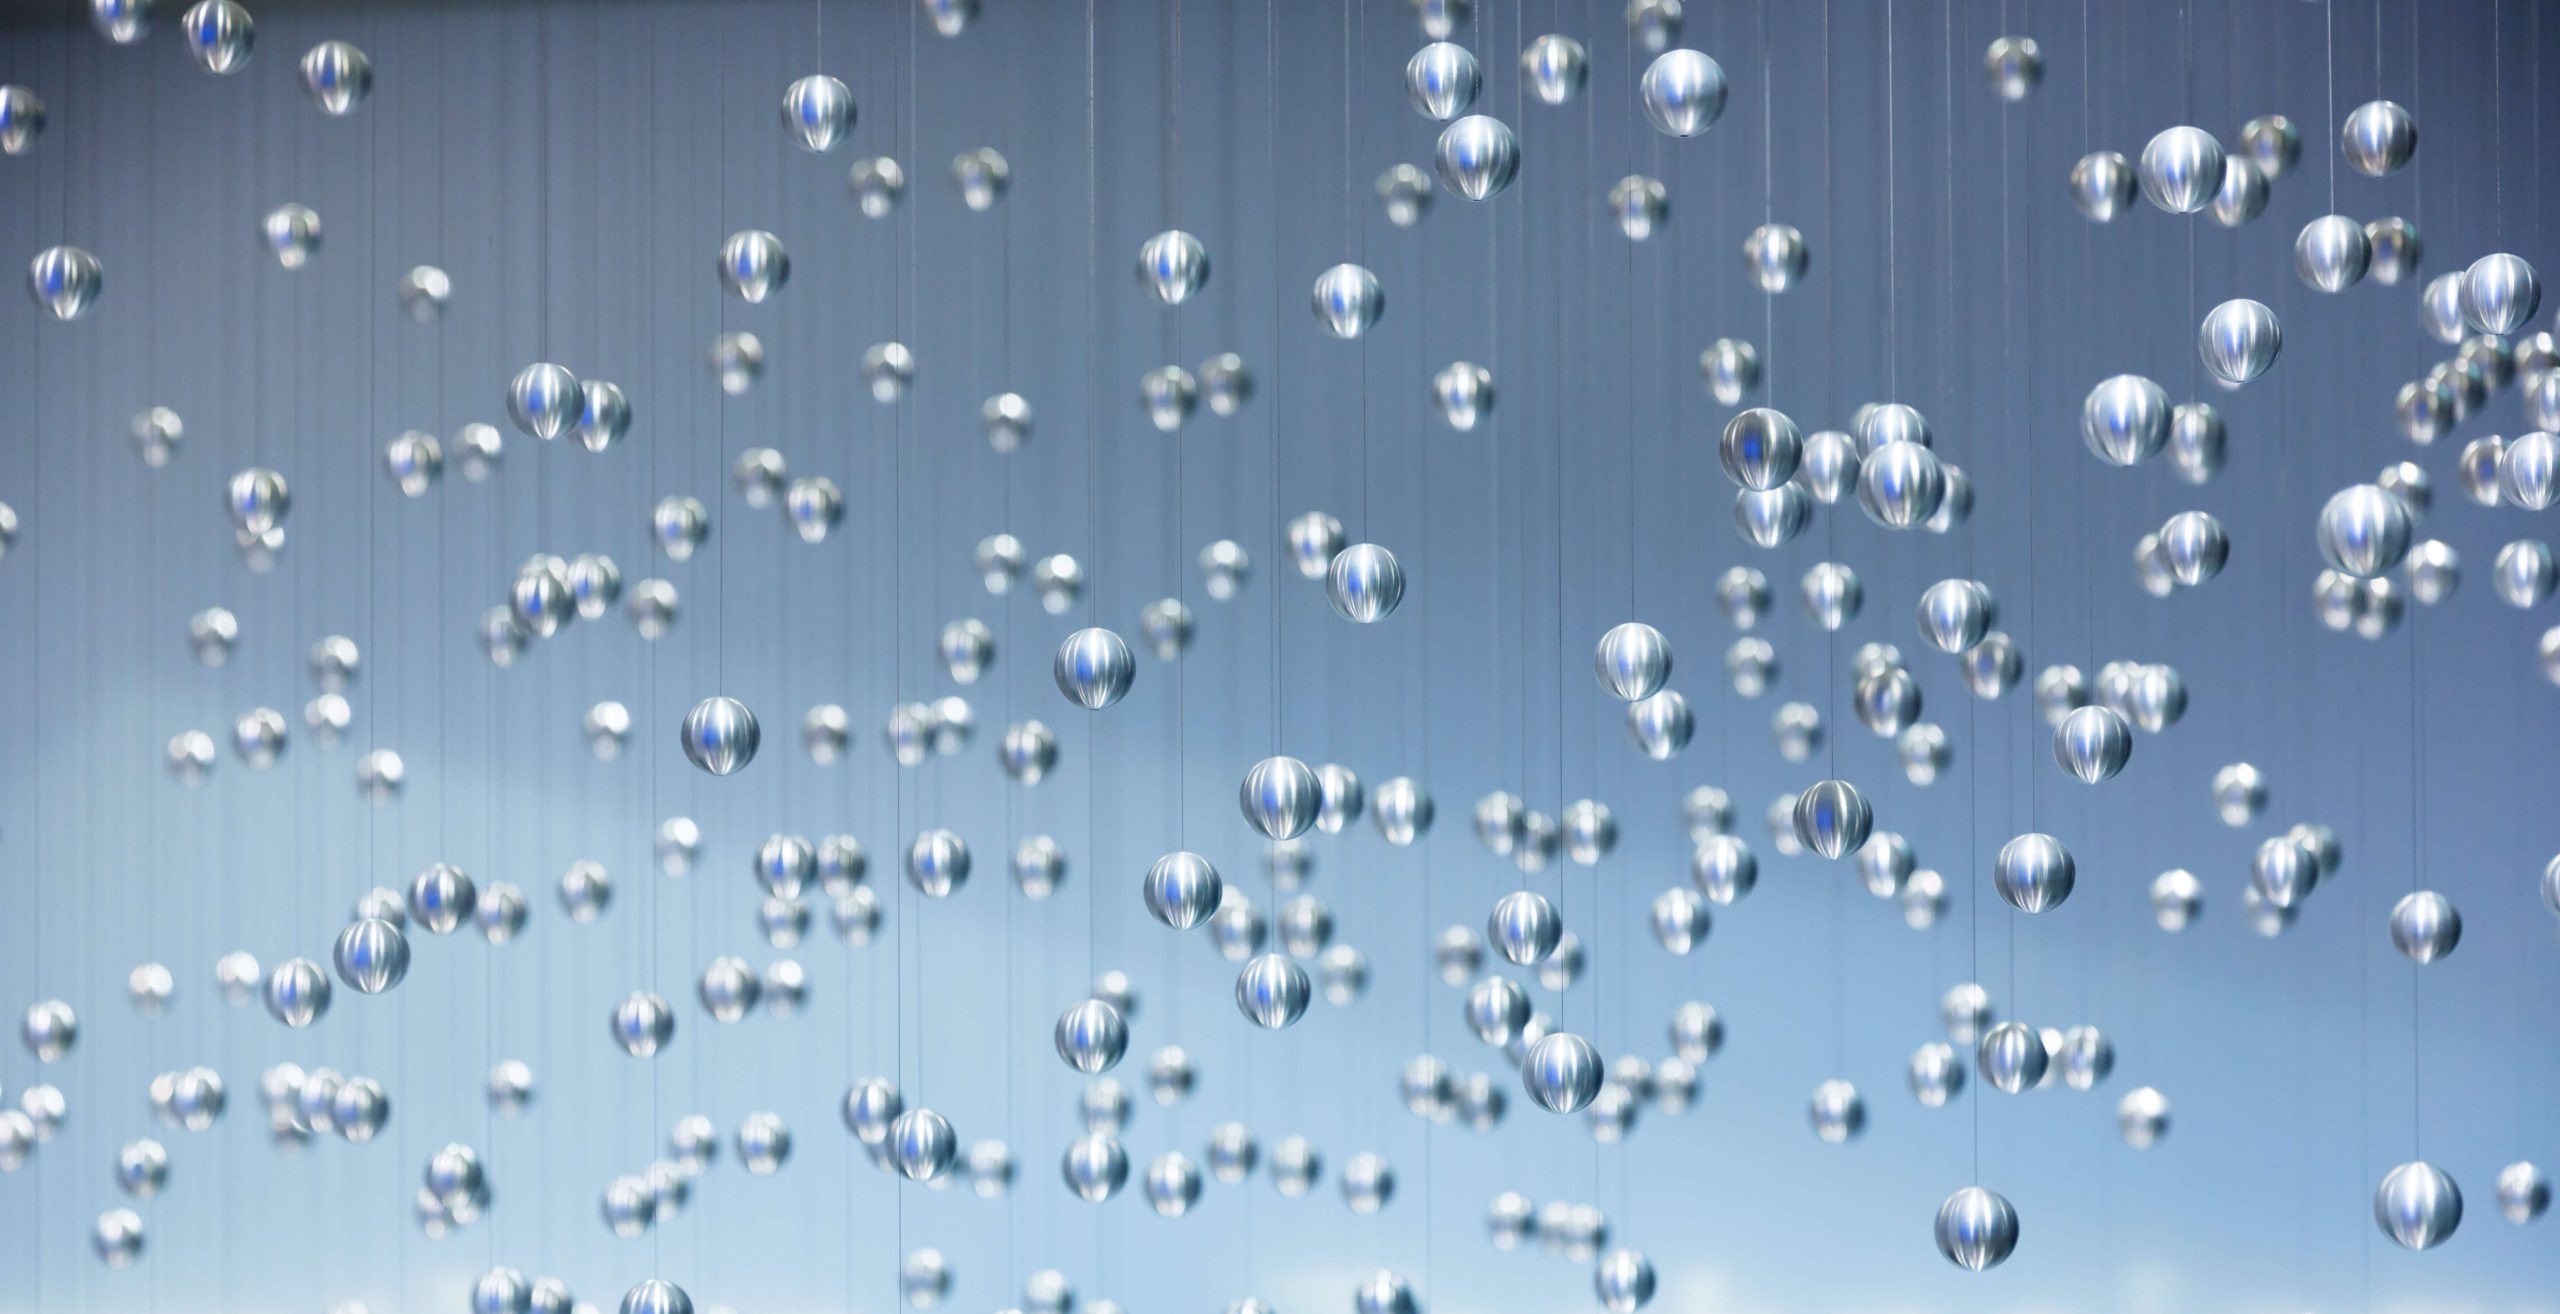 NASAA - Reg BI - Bubbles rising on blue background